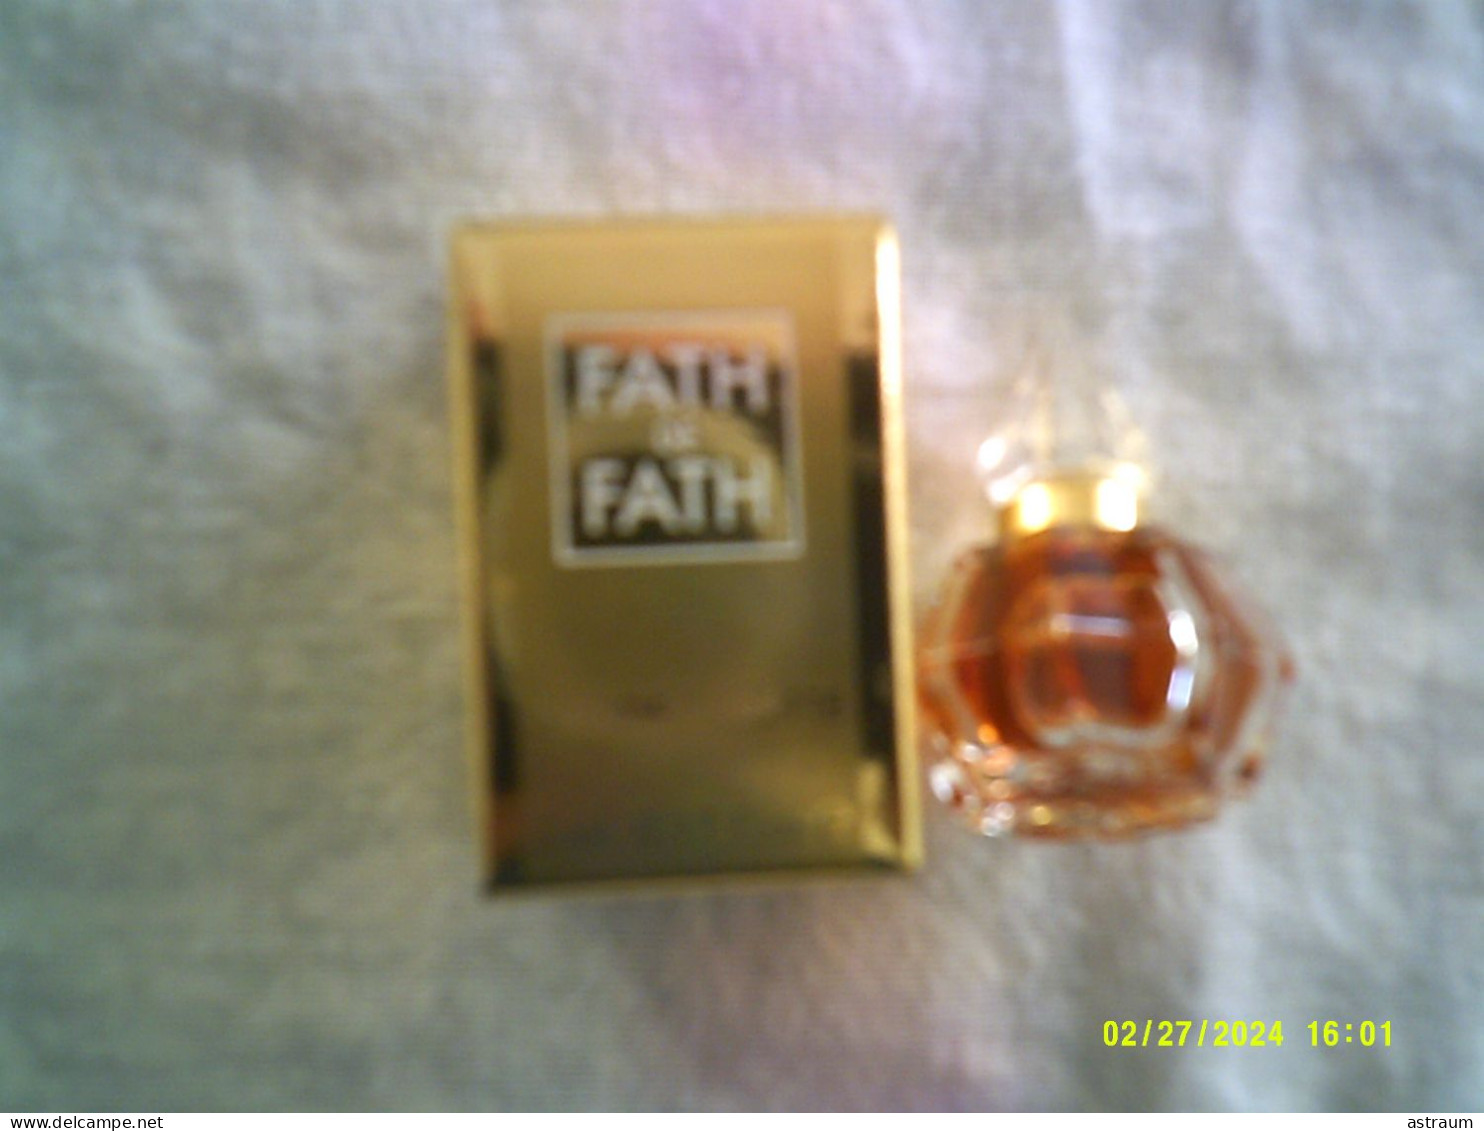 Miniature Ancienne Parfum - Fath De Fath - EDT - Pleine Avec Boite 5ml - Miniaturas Mujer (en Caja)